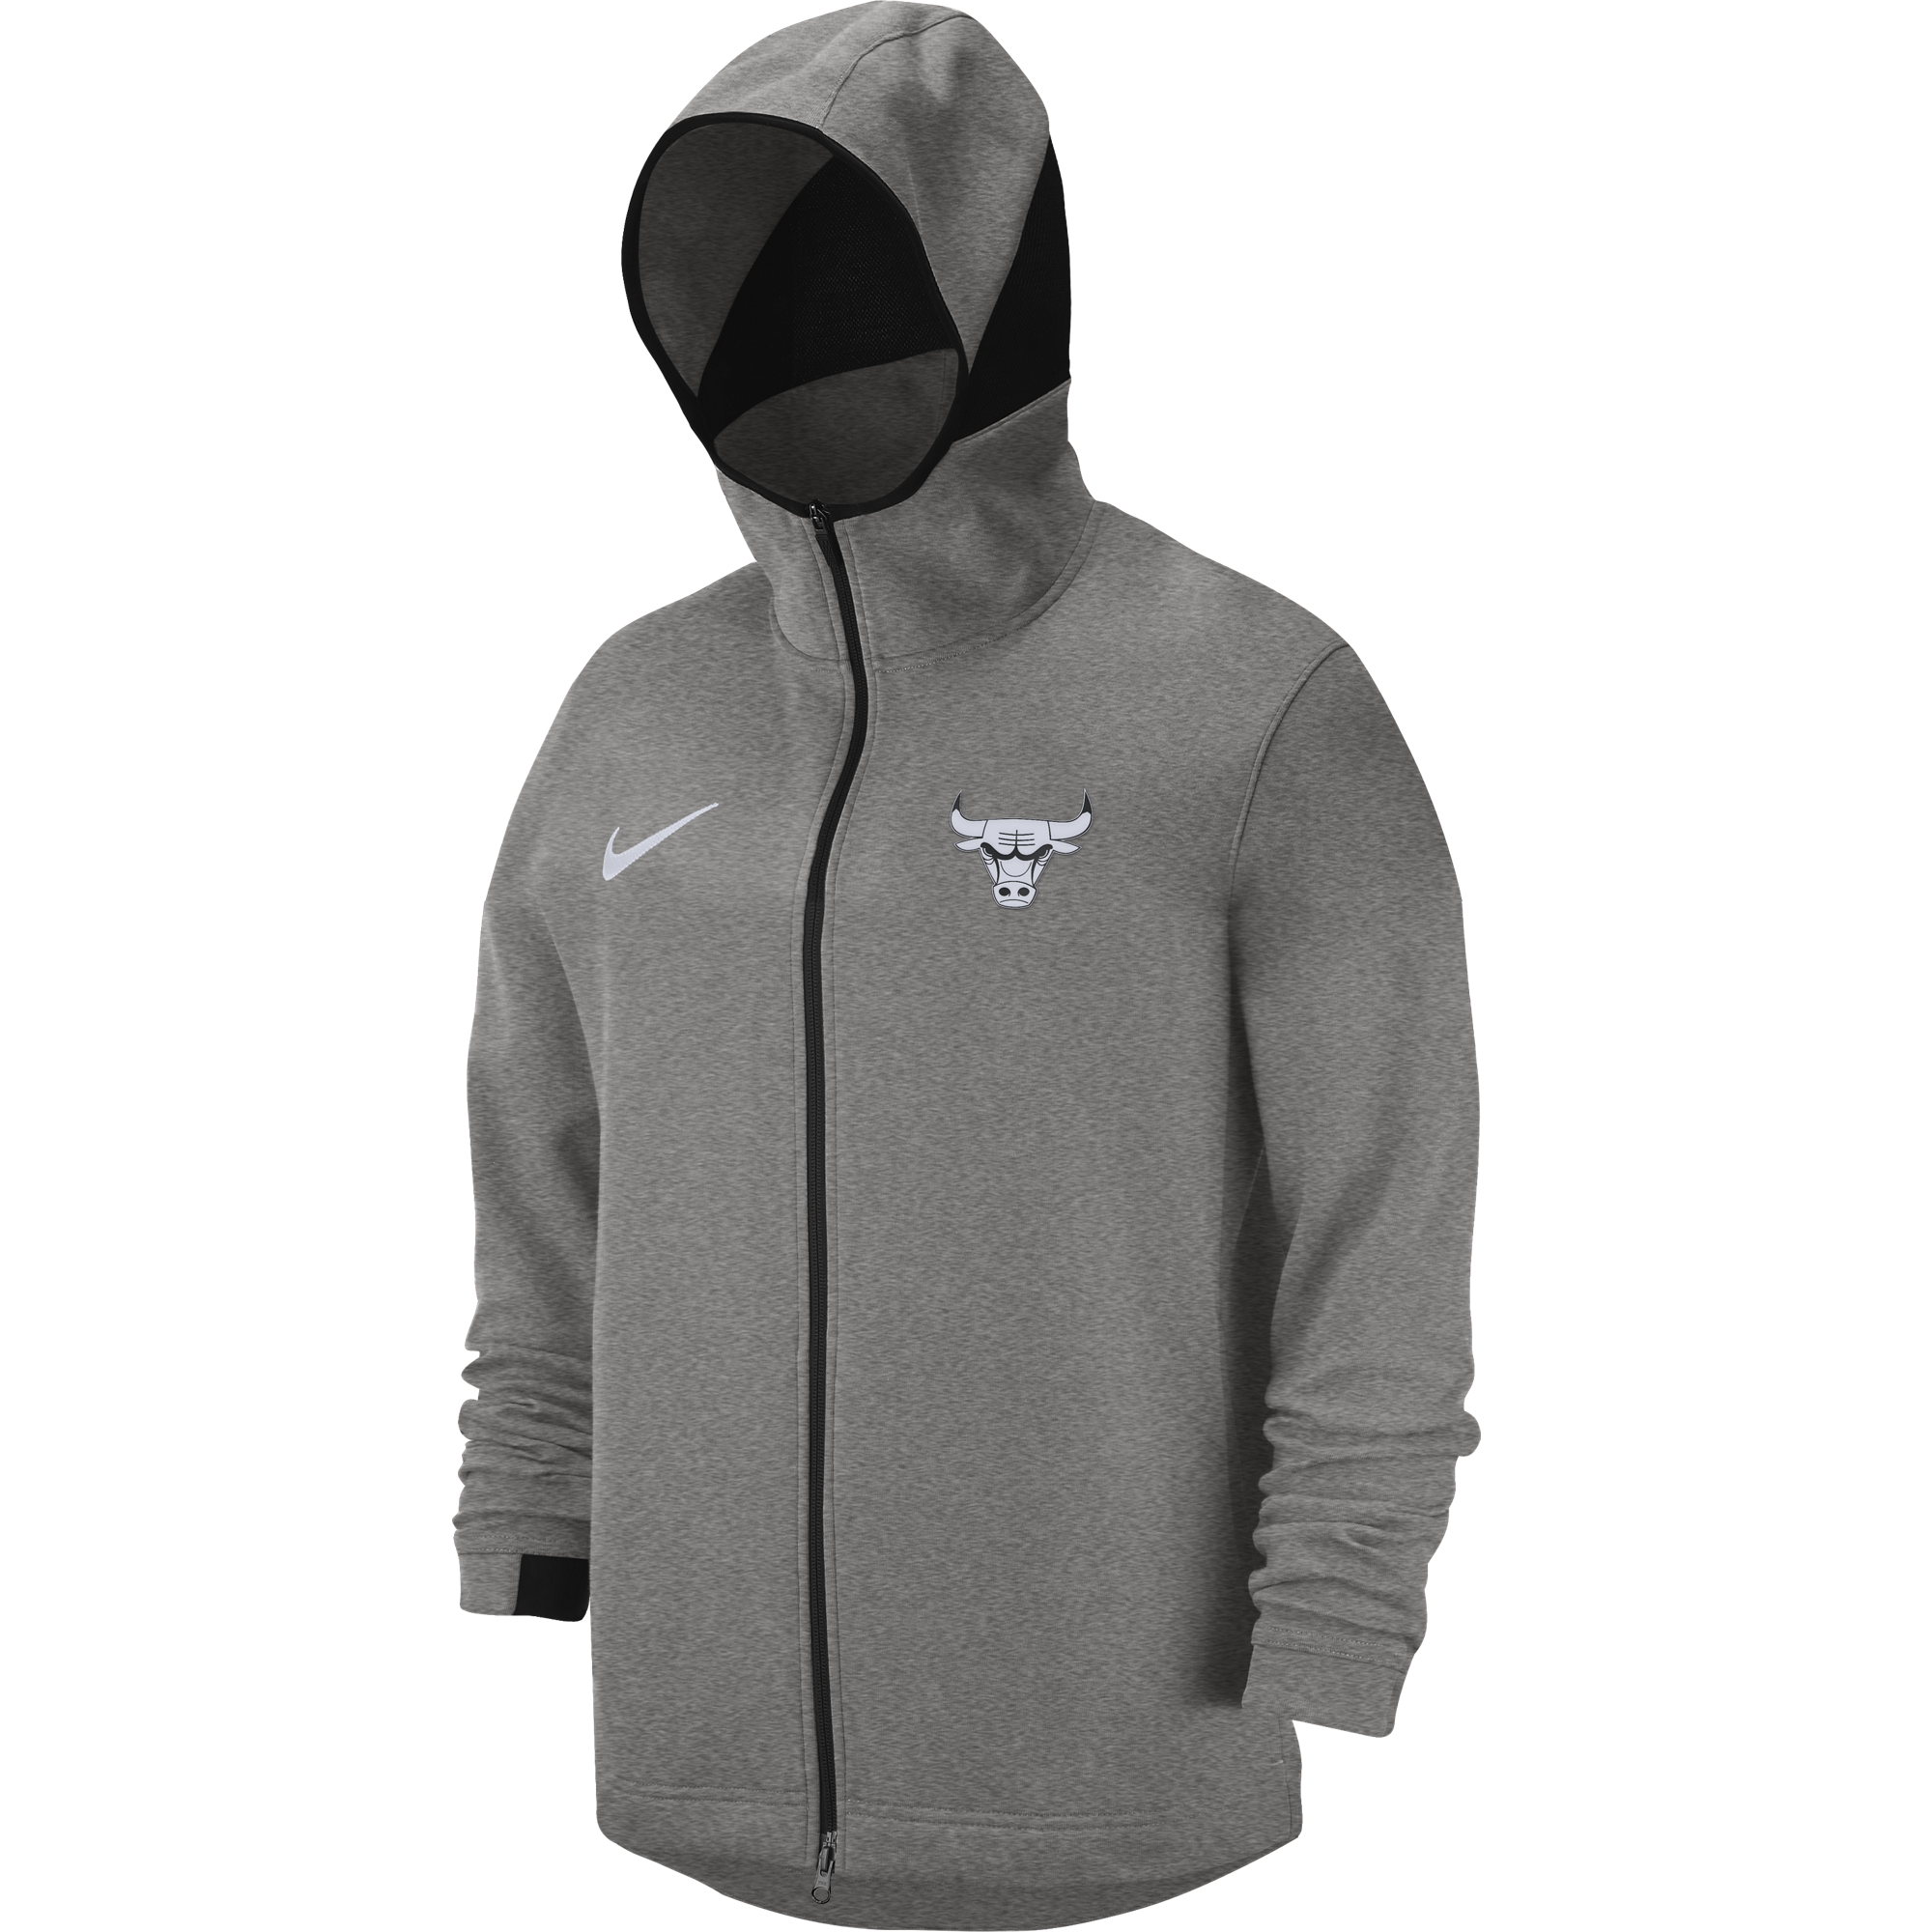 Team 31 Courtside Nike Men's NBA Pullover Fleece Hoodie in Grey, Size: XS | DR9083-025